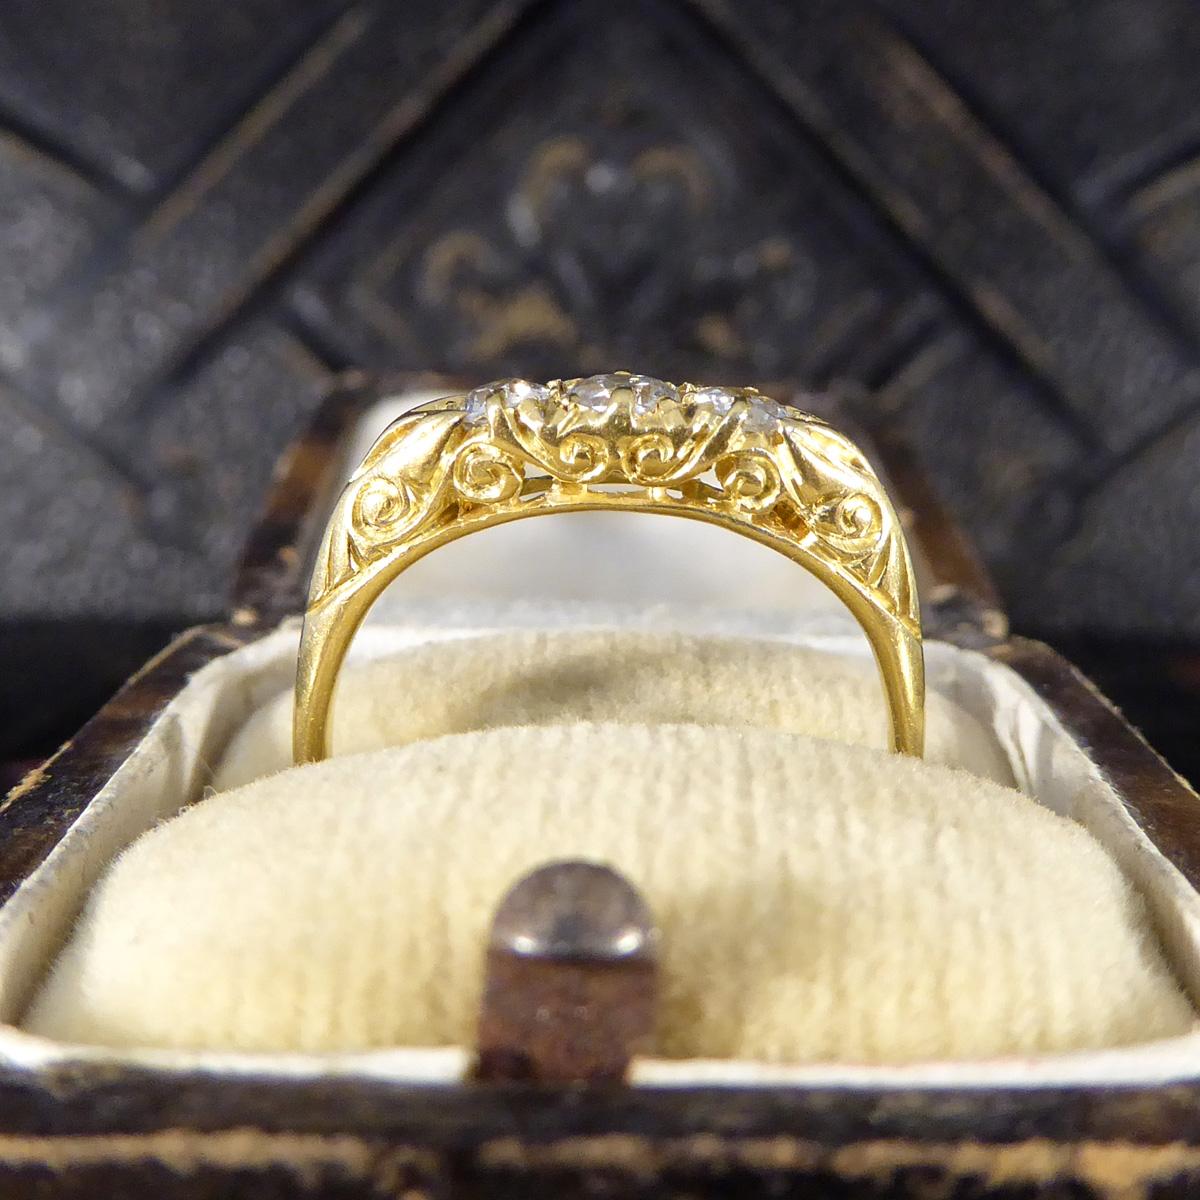 Edwardian Three Stone Diamond Ring with Swirl Gallery in 18 Carat Yellow Gold 3